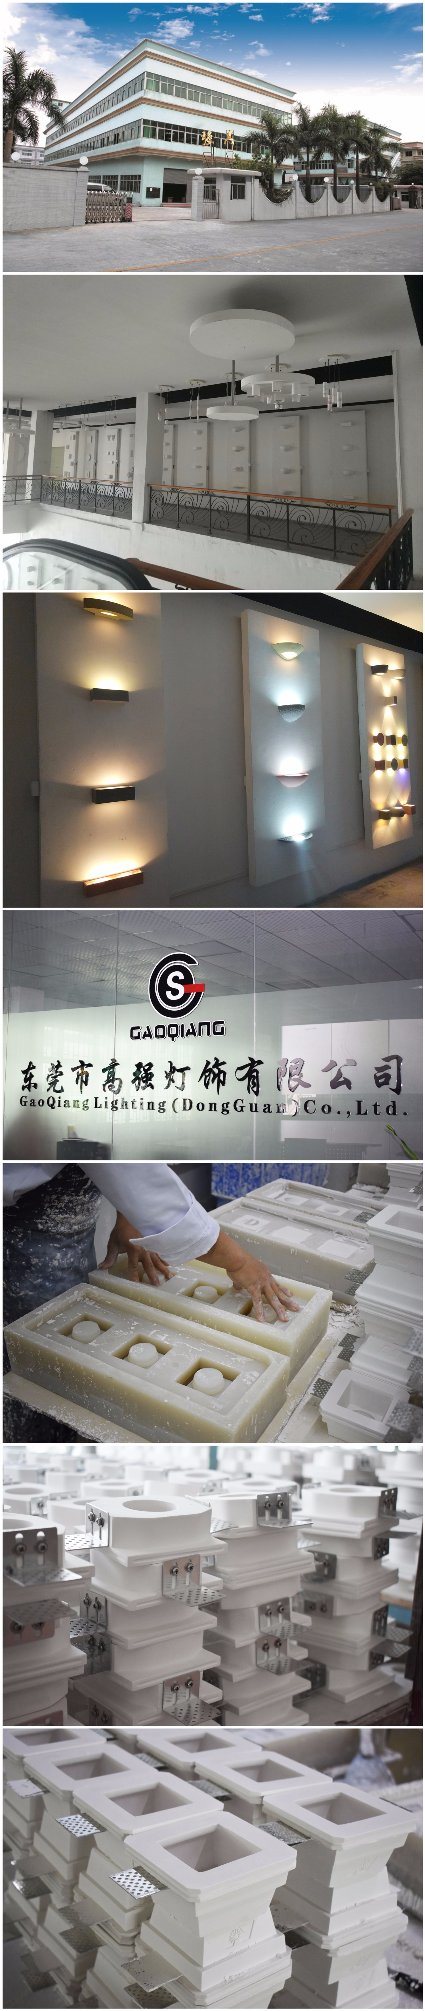 Hotsell Lighting Indoor Gypsum Wall Lamp LED Lighting Plaster Wall Light